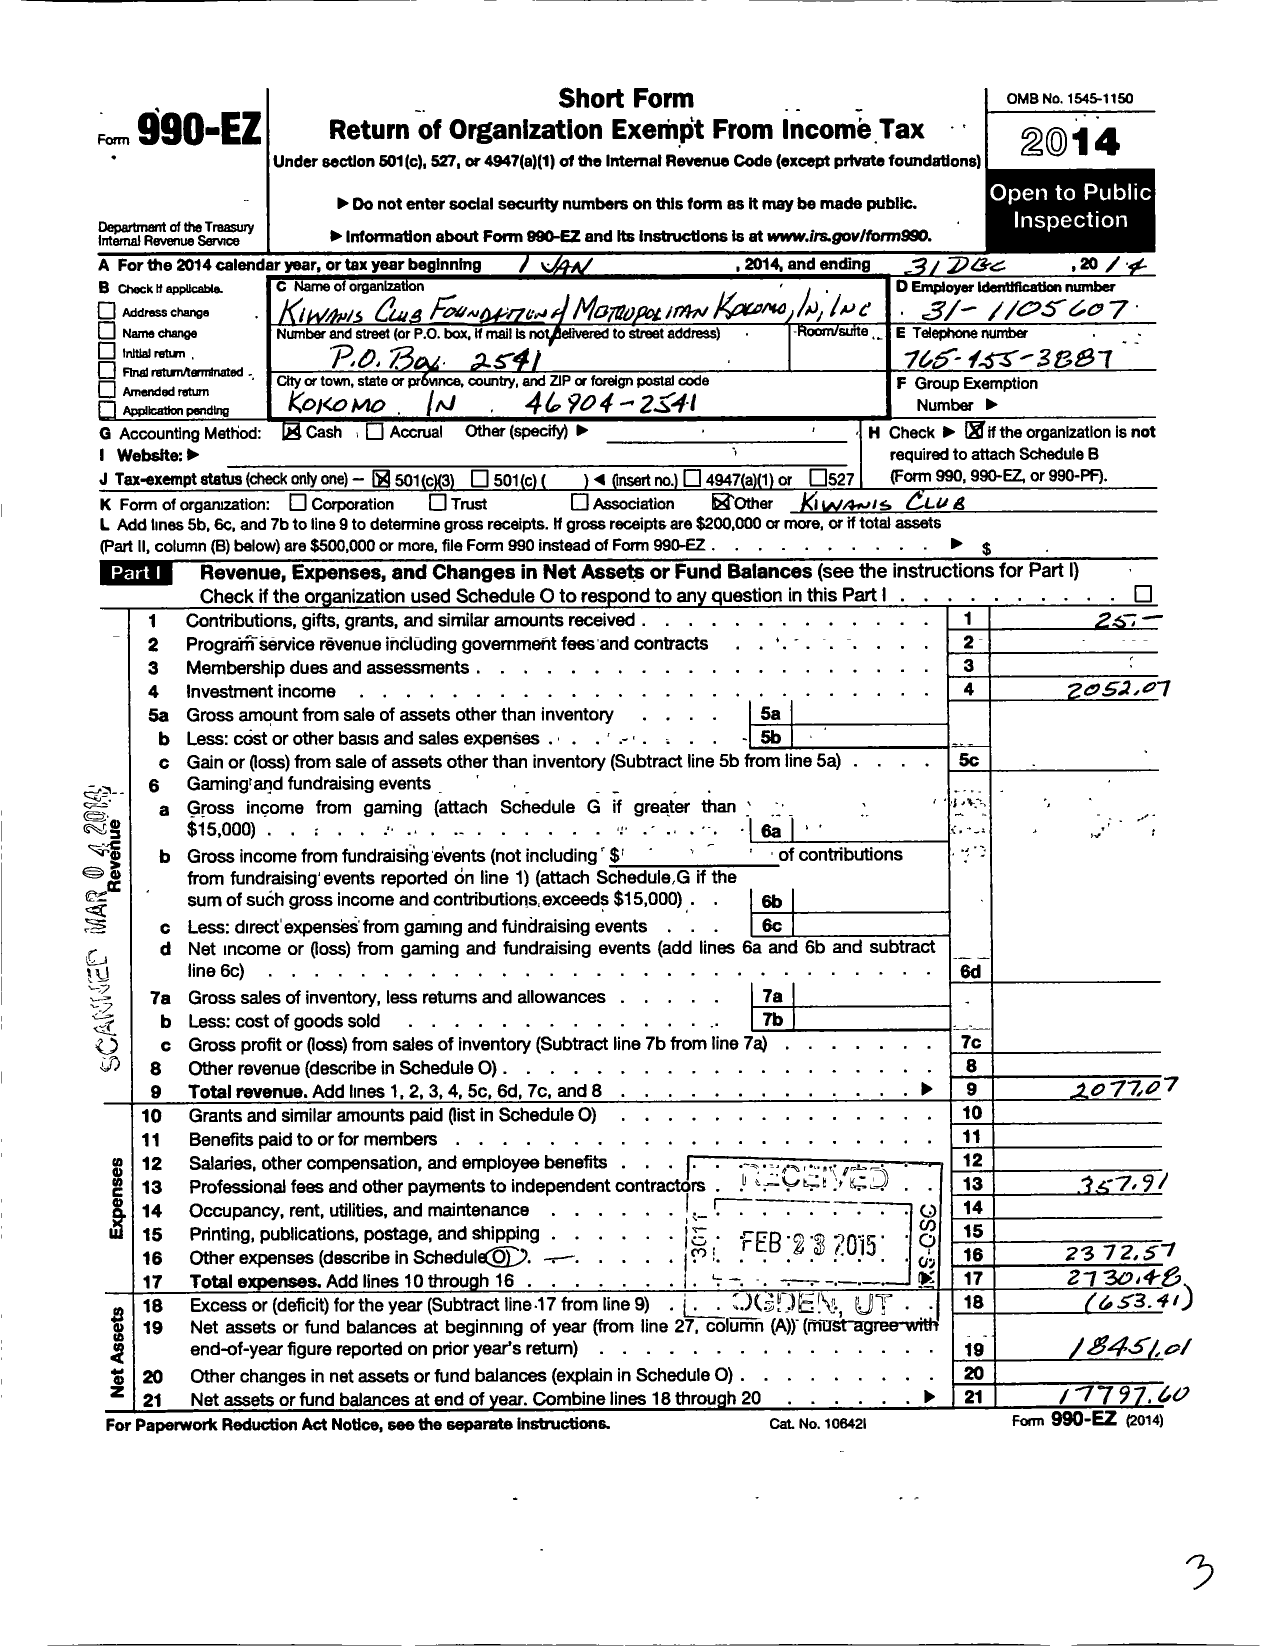 Image of first page of 2014 Form 990EZ for Kiwanis Club Foundation of Metropolitan Kokomo Indiana